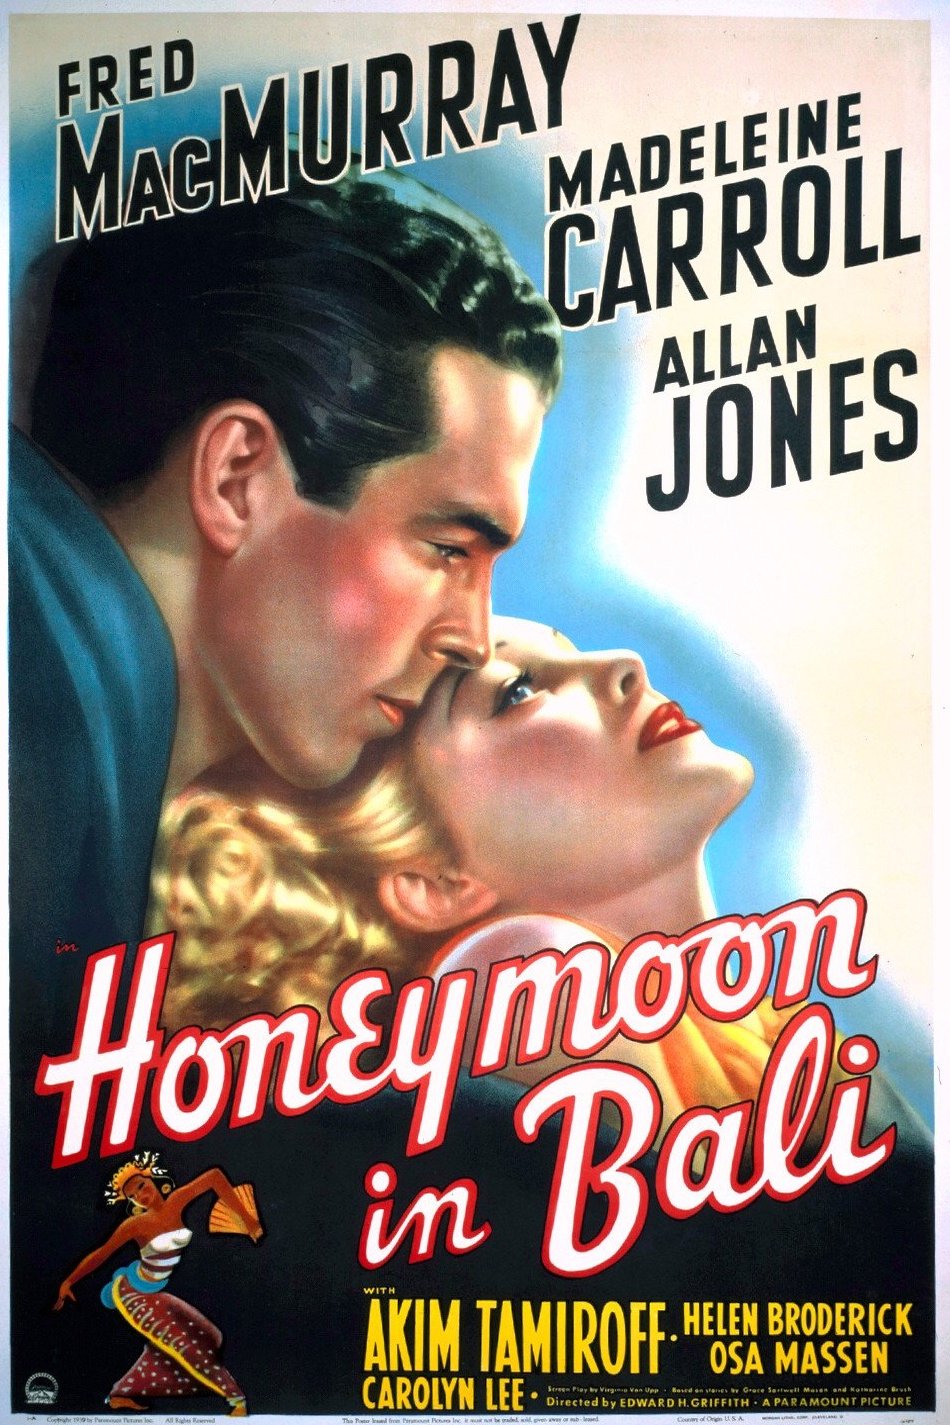 Poster of the movie Honeymoon in Bali